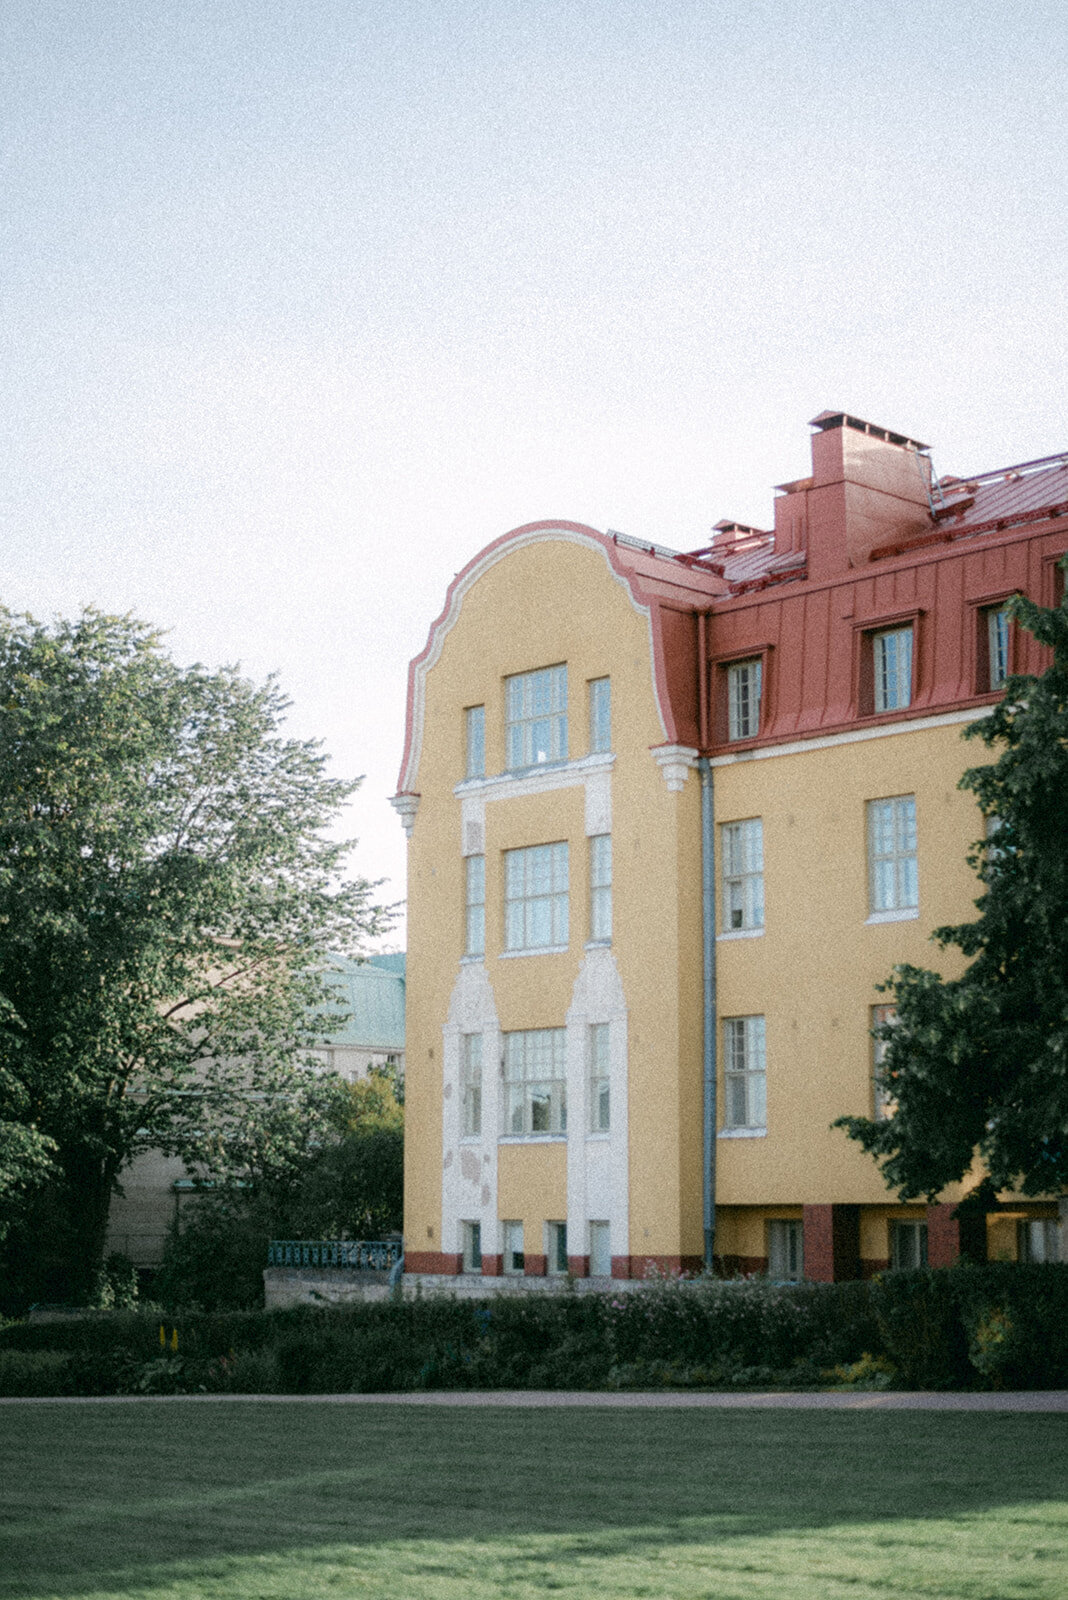 A photograph of art nouveaou buildings in Helsinki by photographer Hannika Gabrielsson